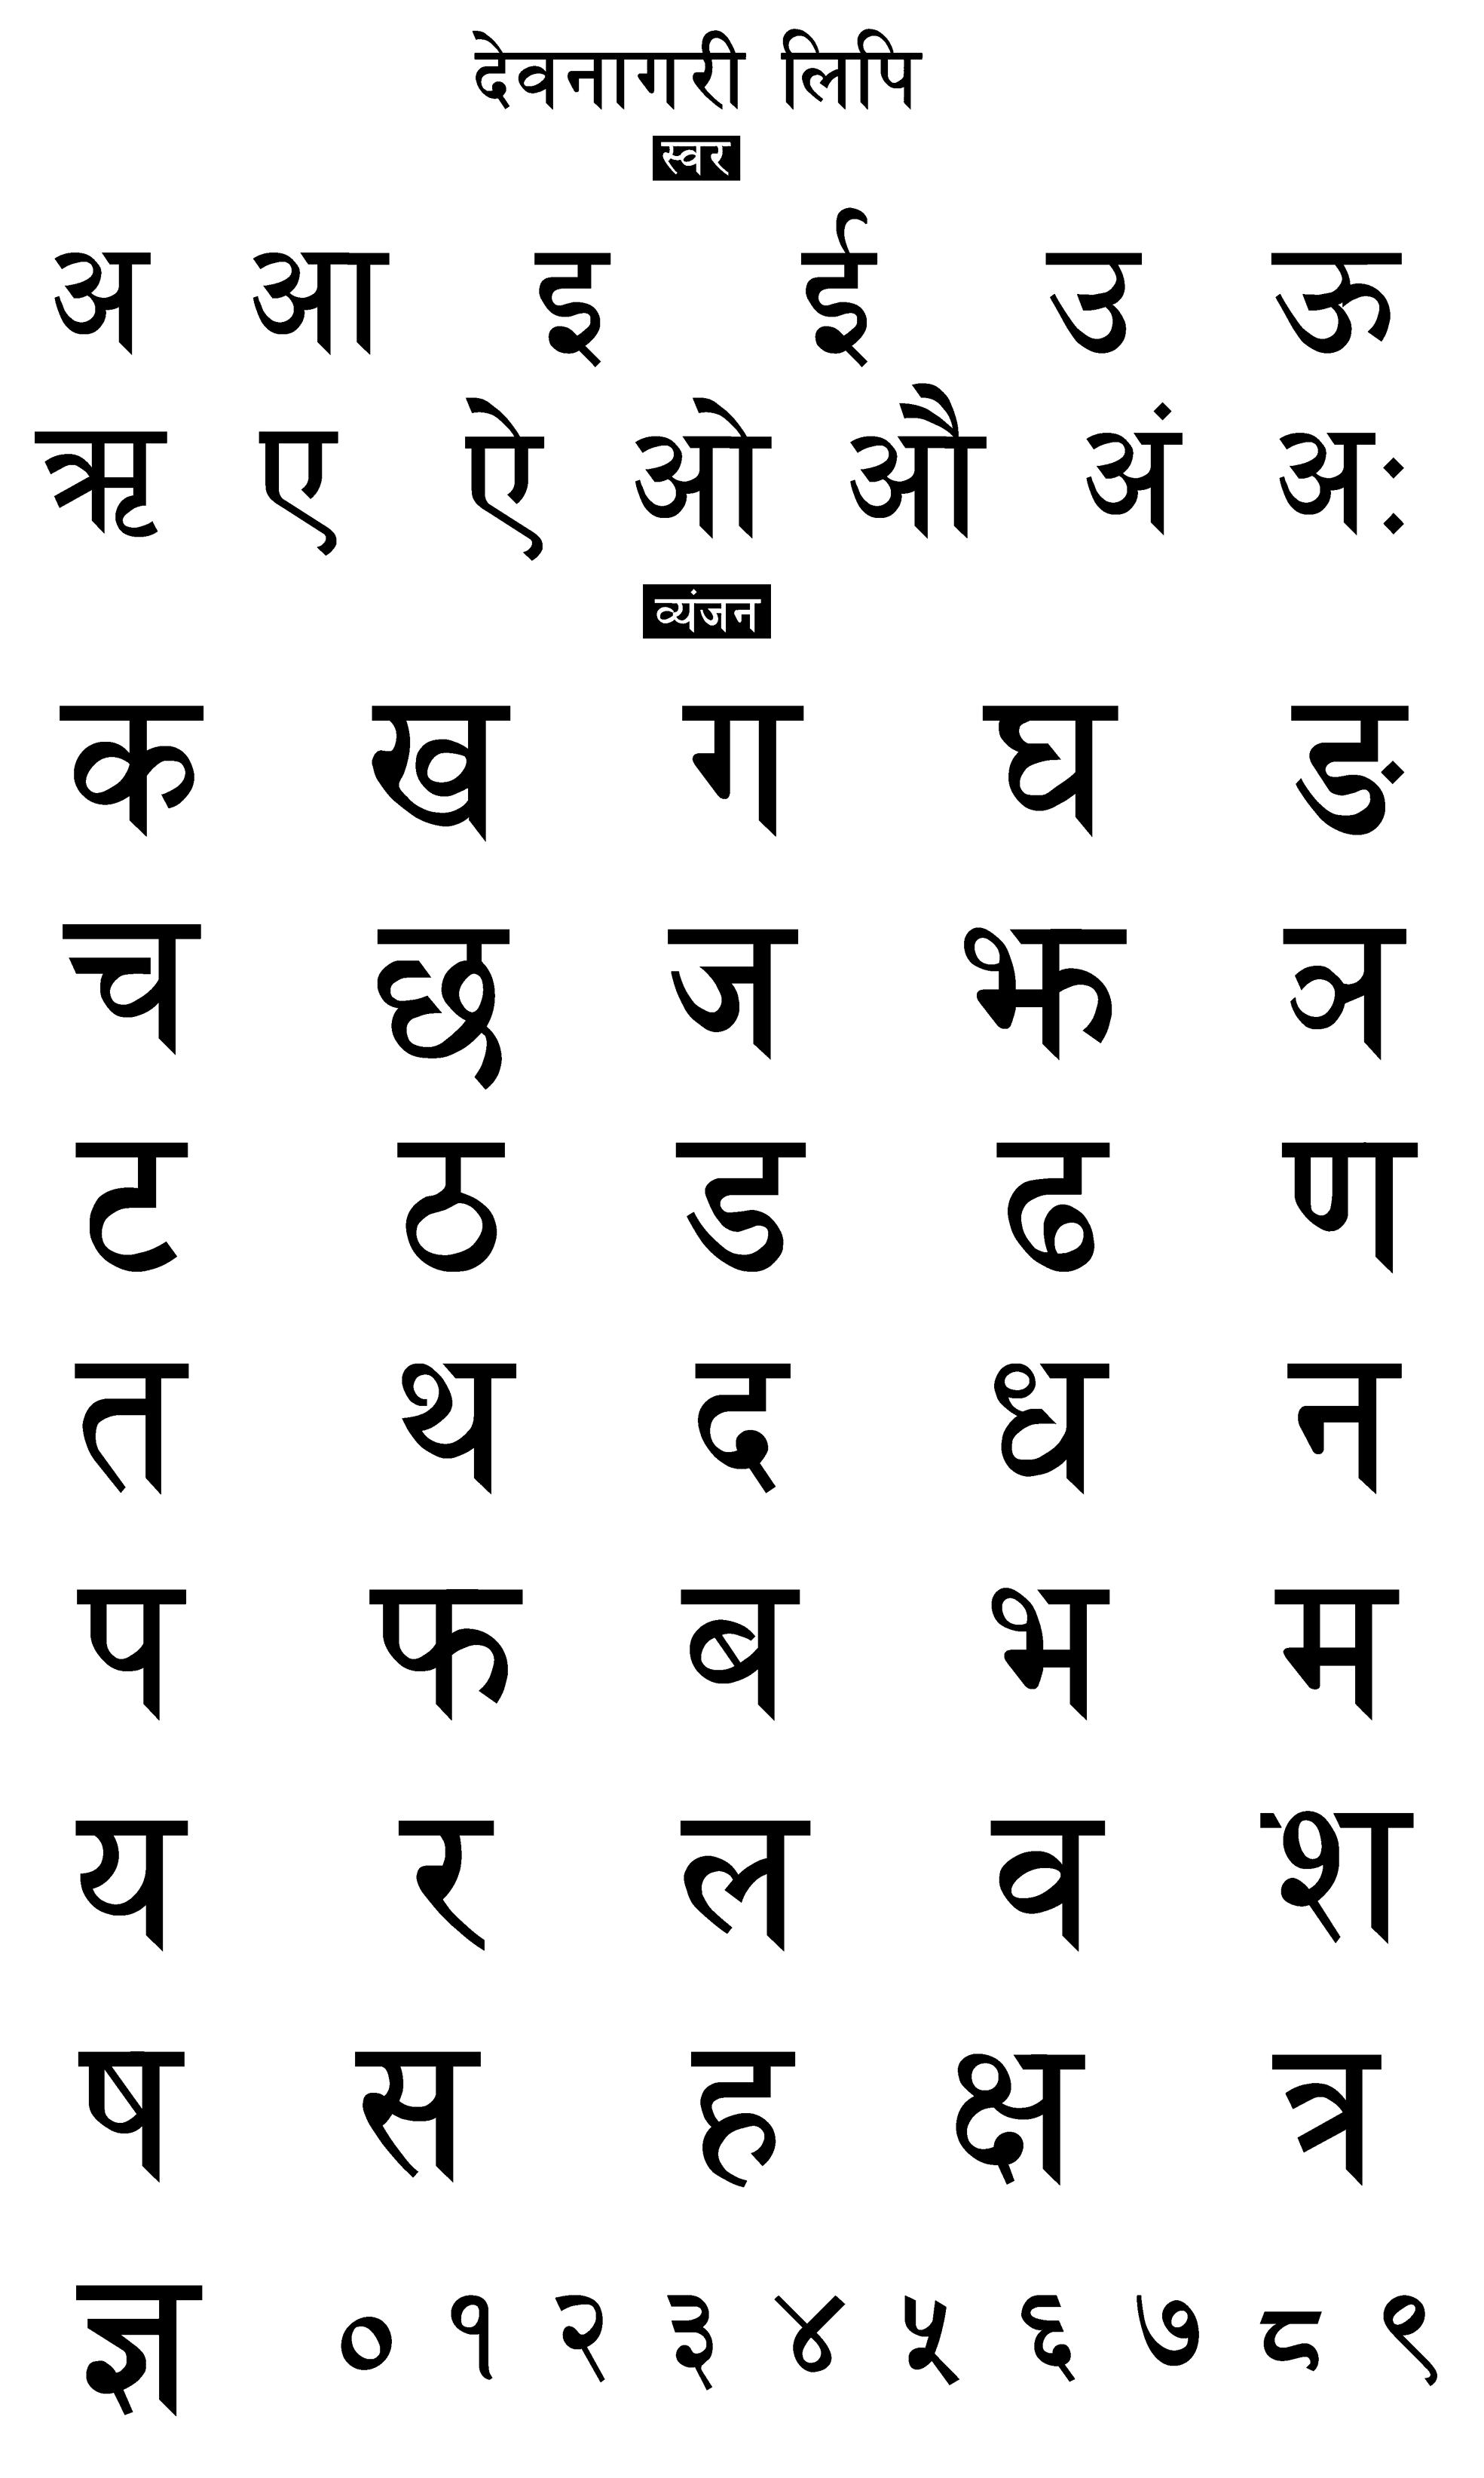 Hindi Devanagari alphabet chart PNG